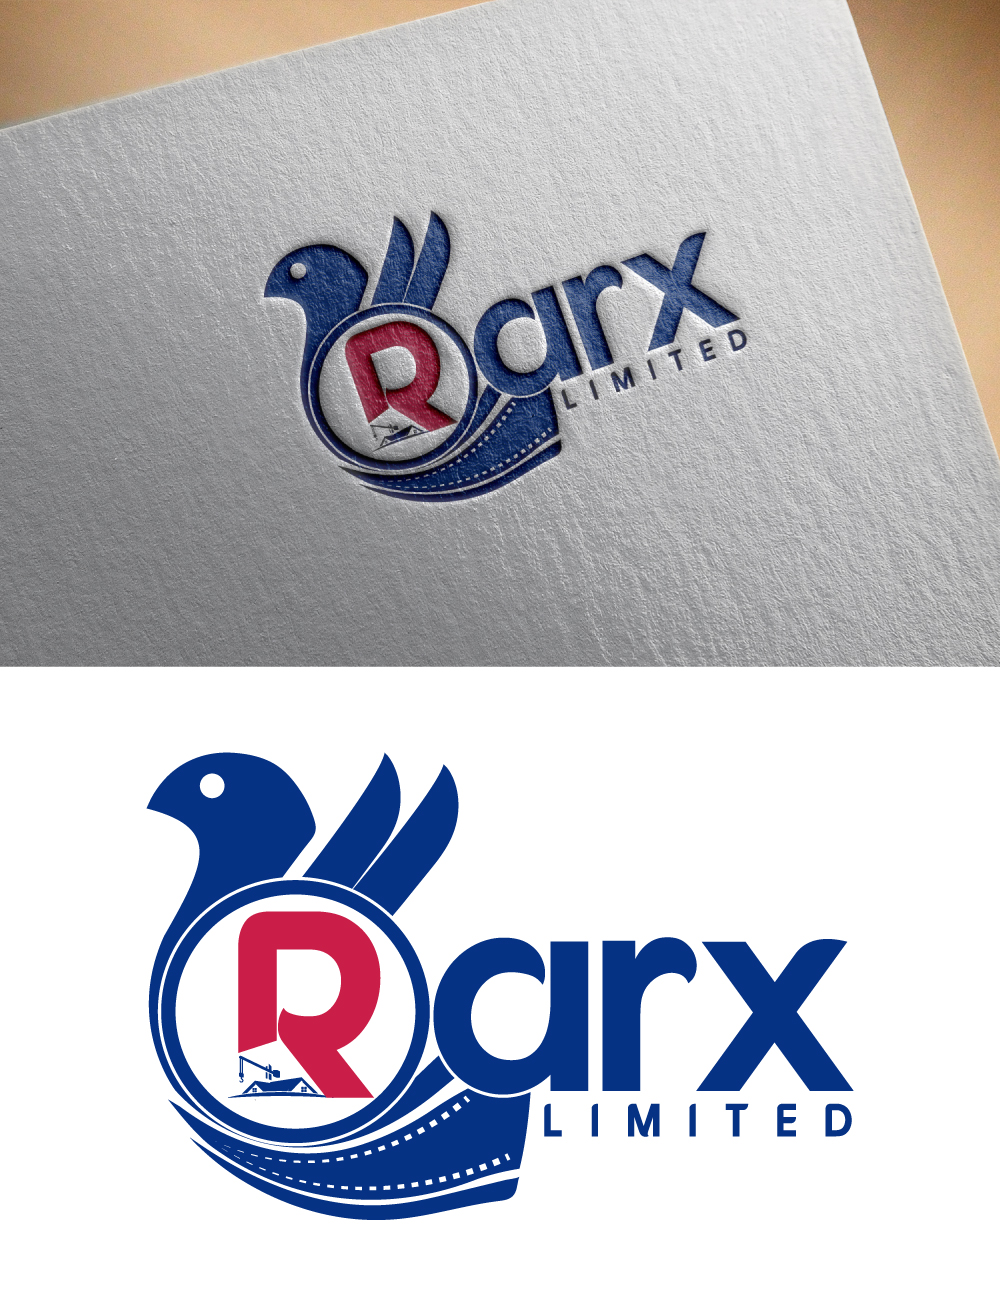 RARX-Limited Logo Design Contest 4